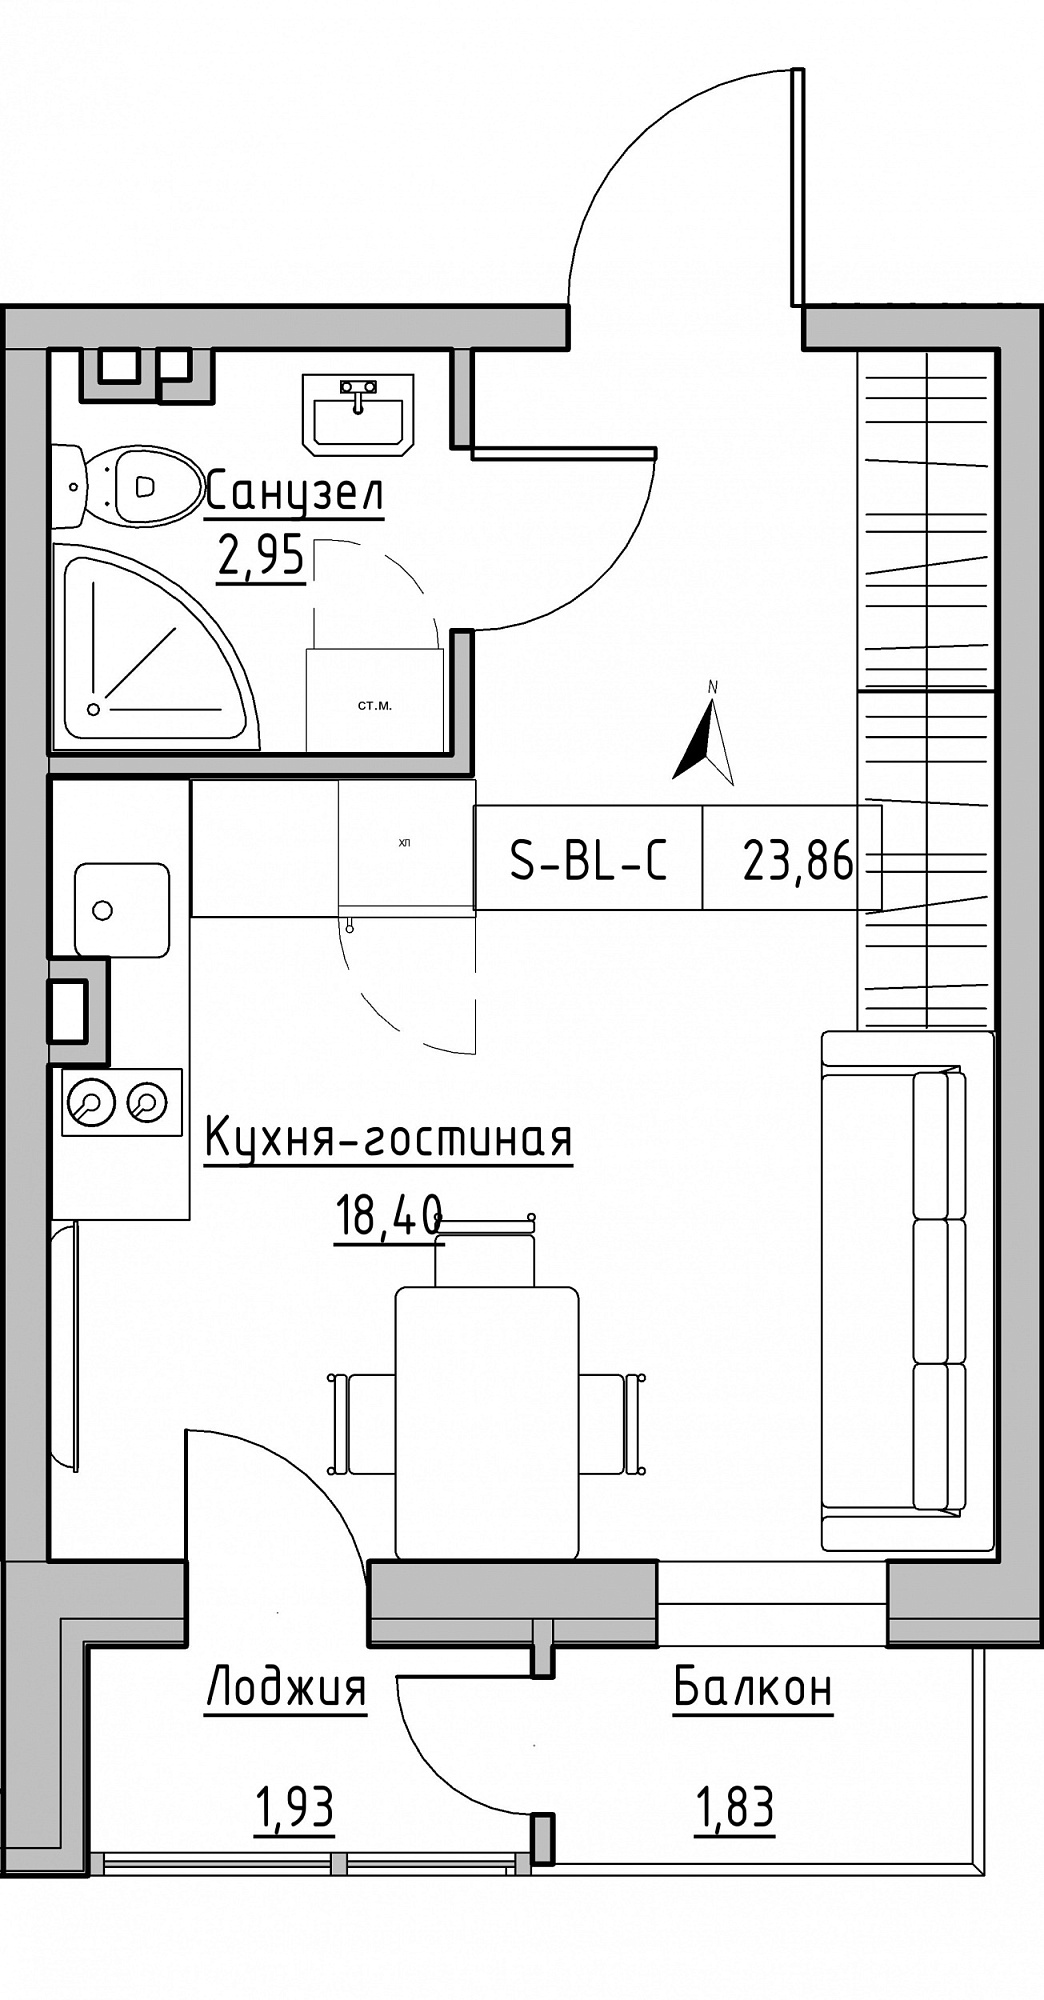 Planning Smart flats area 23.86m2, KS-024-03/0005.